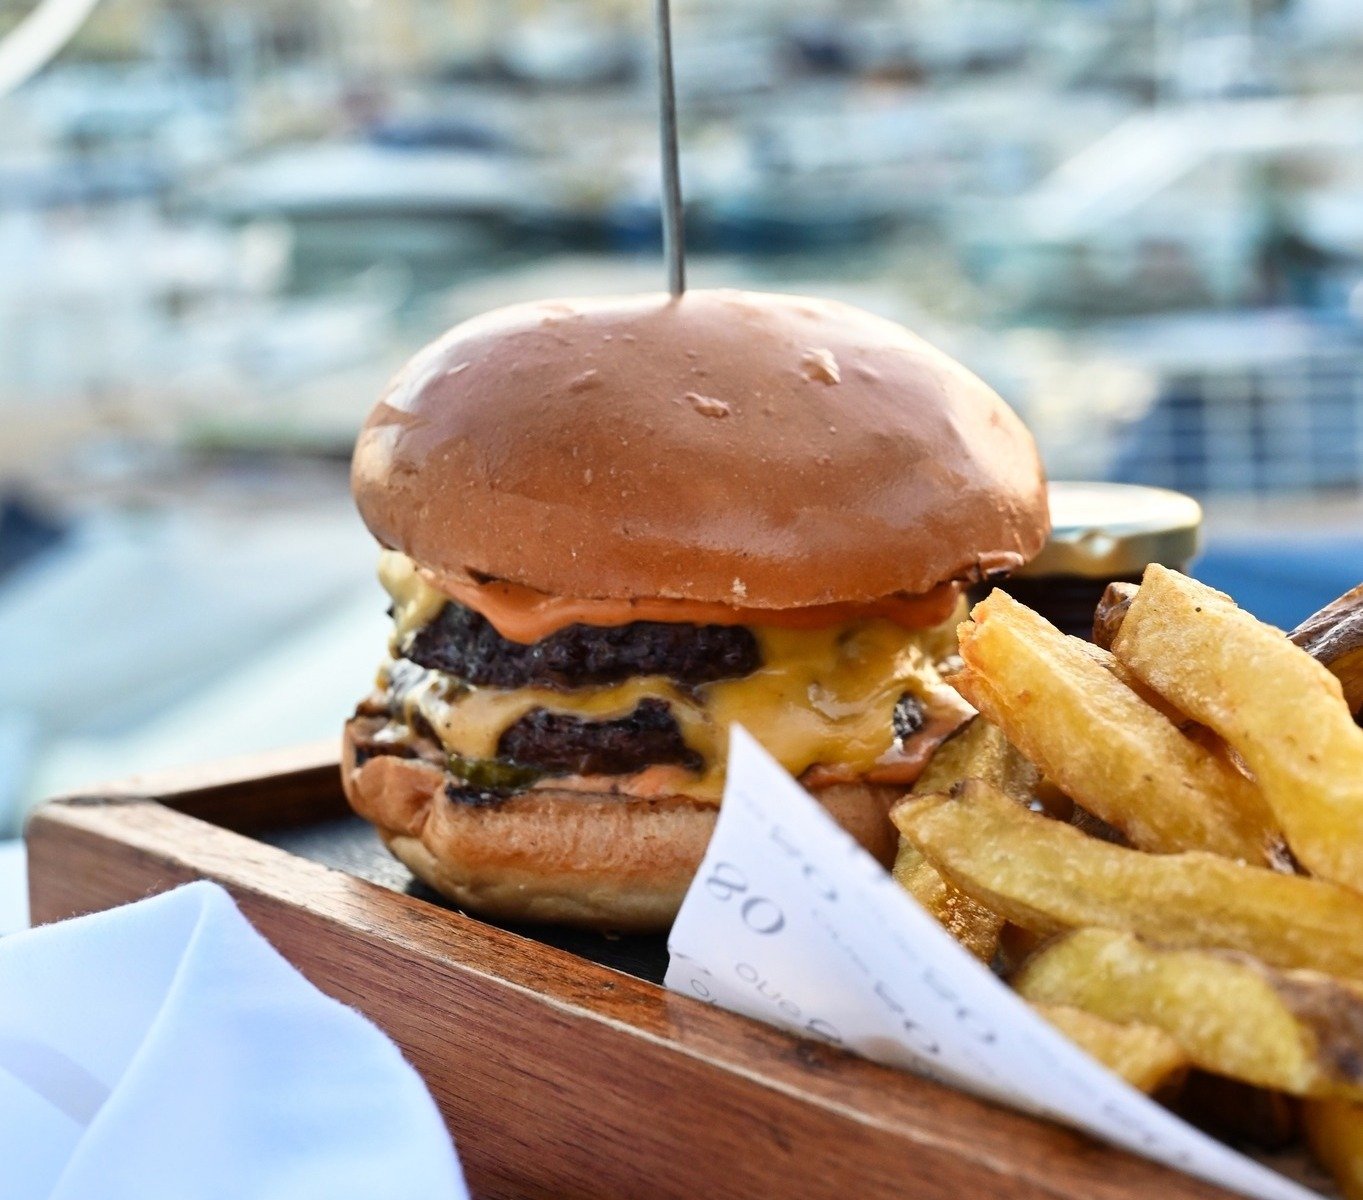 Best Burgers in Malta - One80 Kitchen at Mgarr Yacht Marina, Gozo